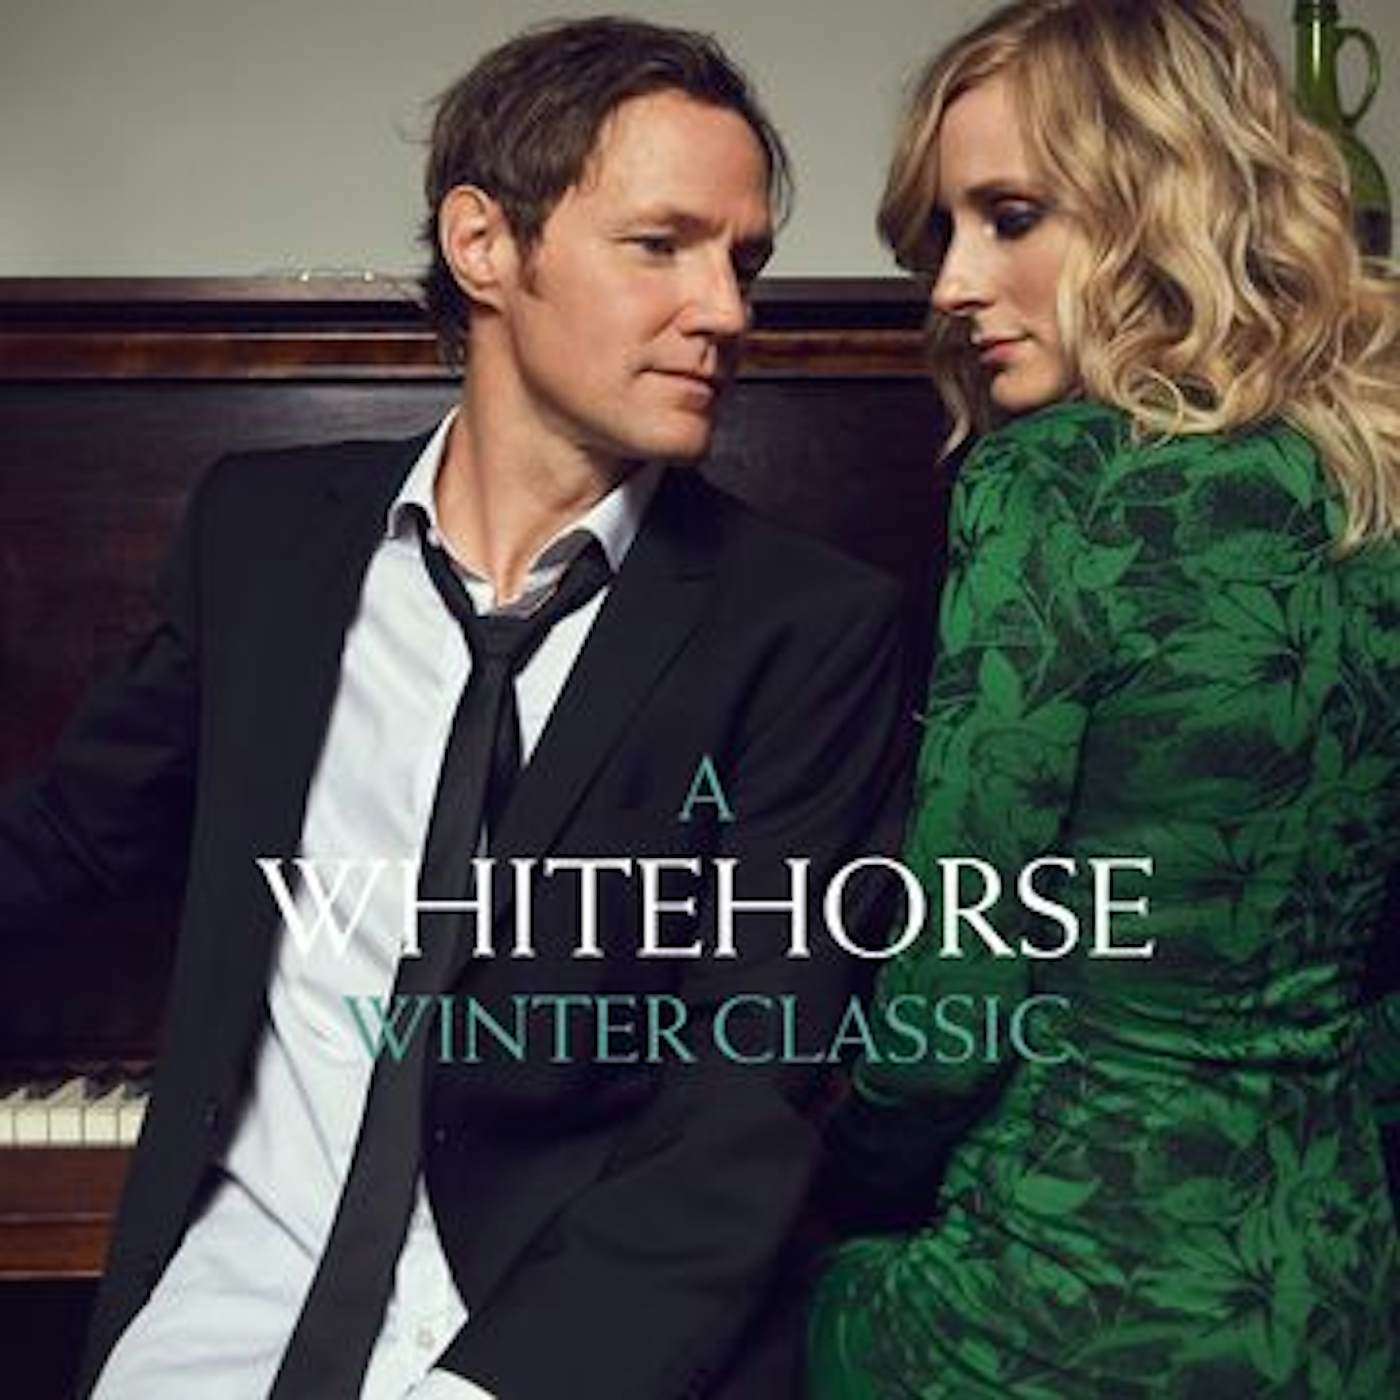 Whitehorse Winter Classic Vinyl Record